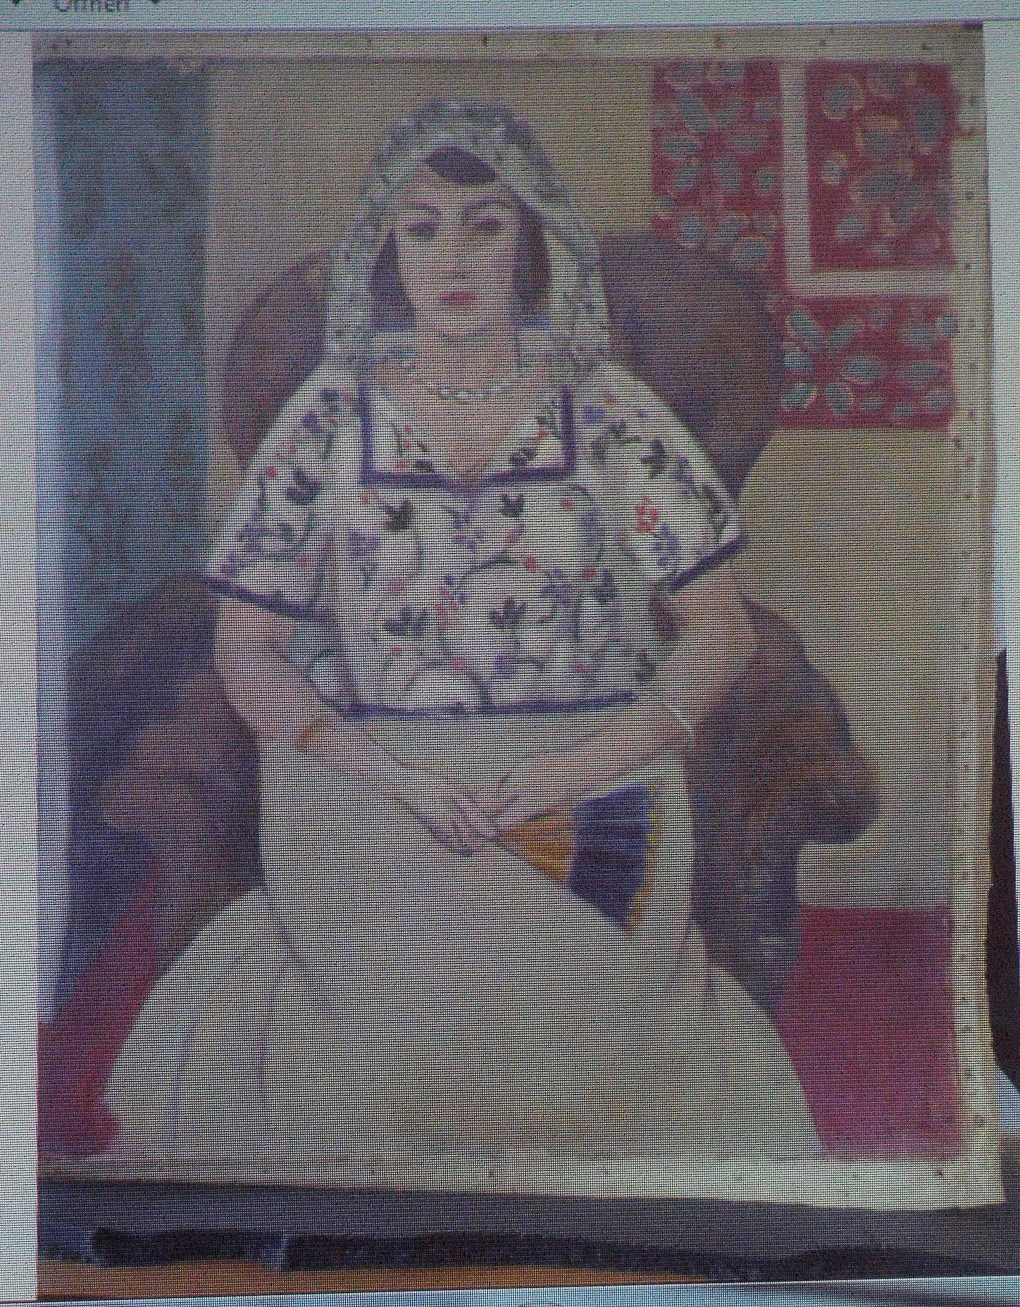 Stolen Matisse painting belongs to Jewish family